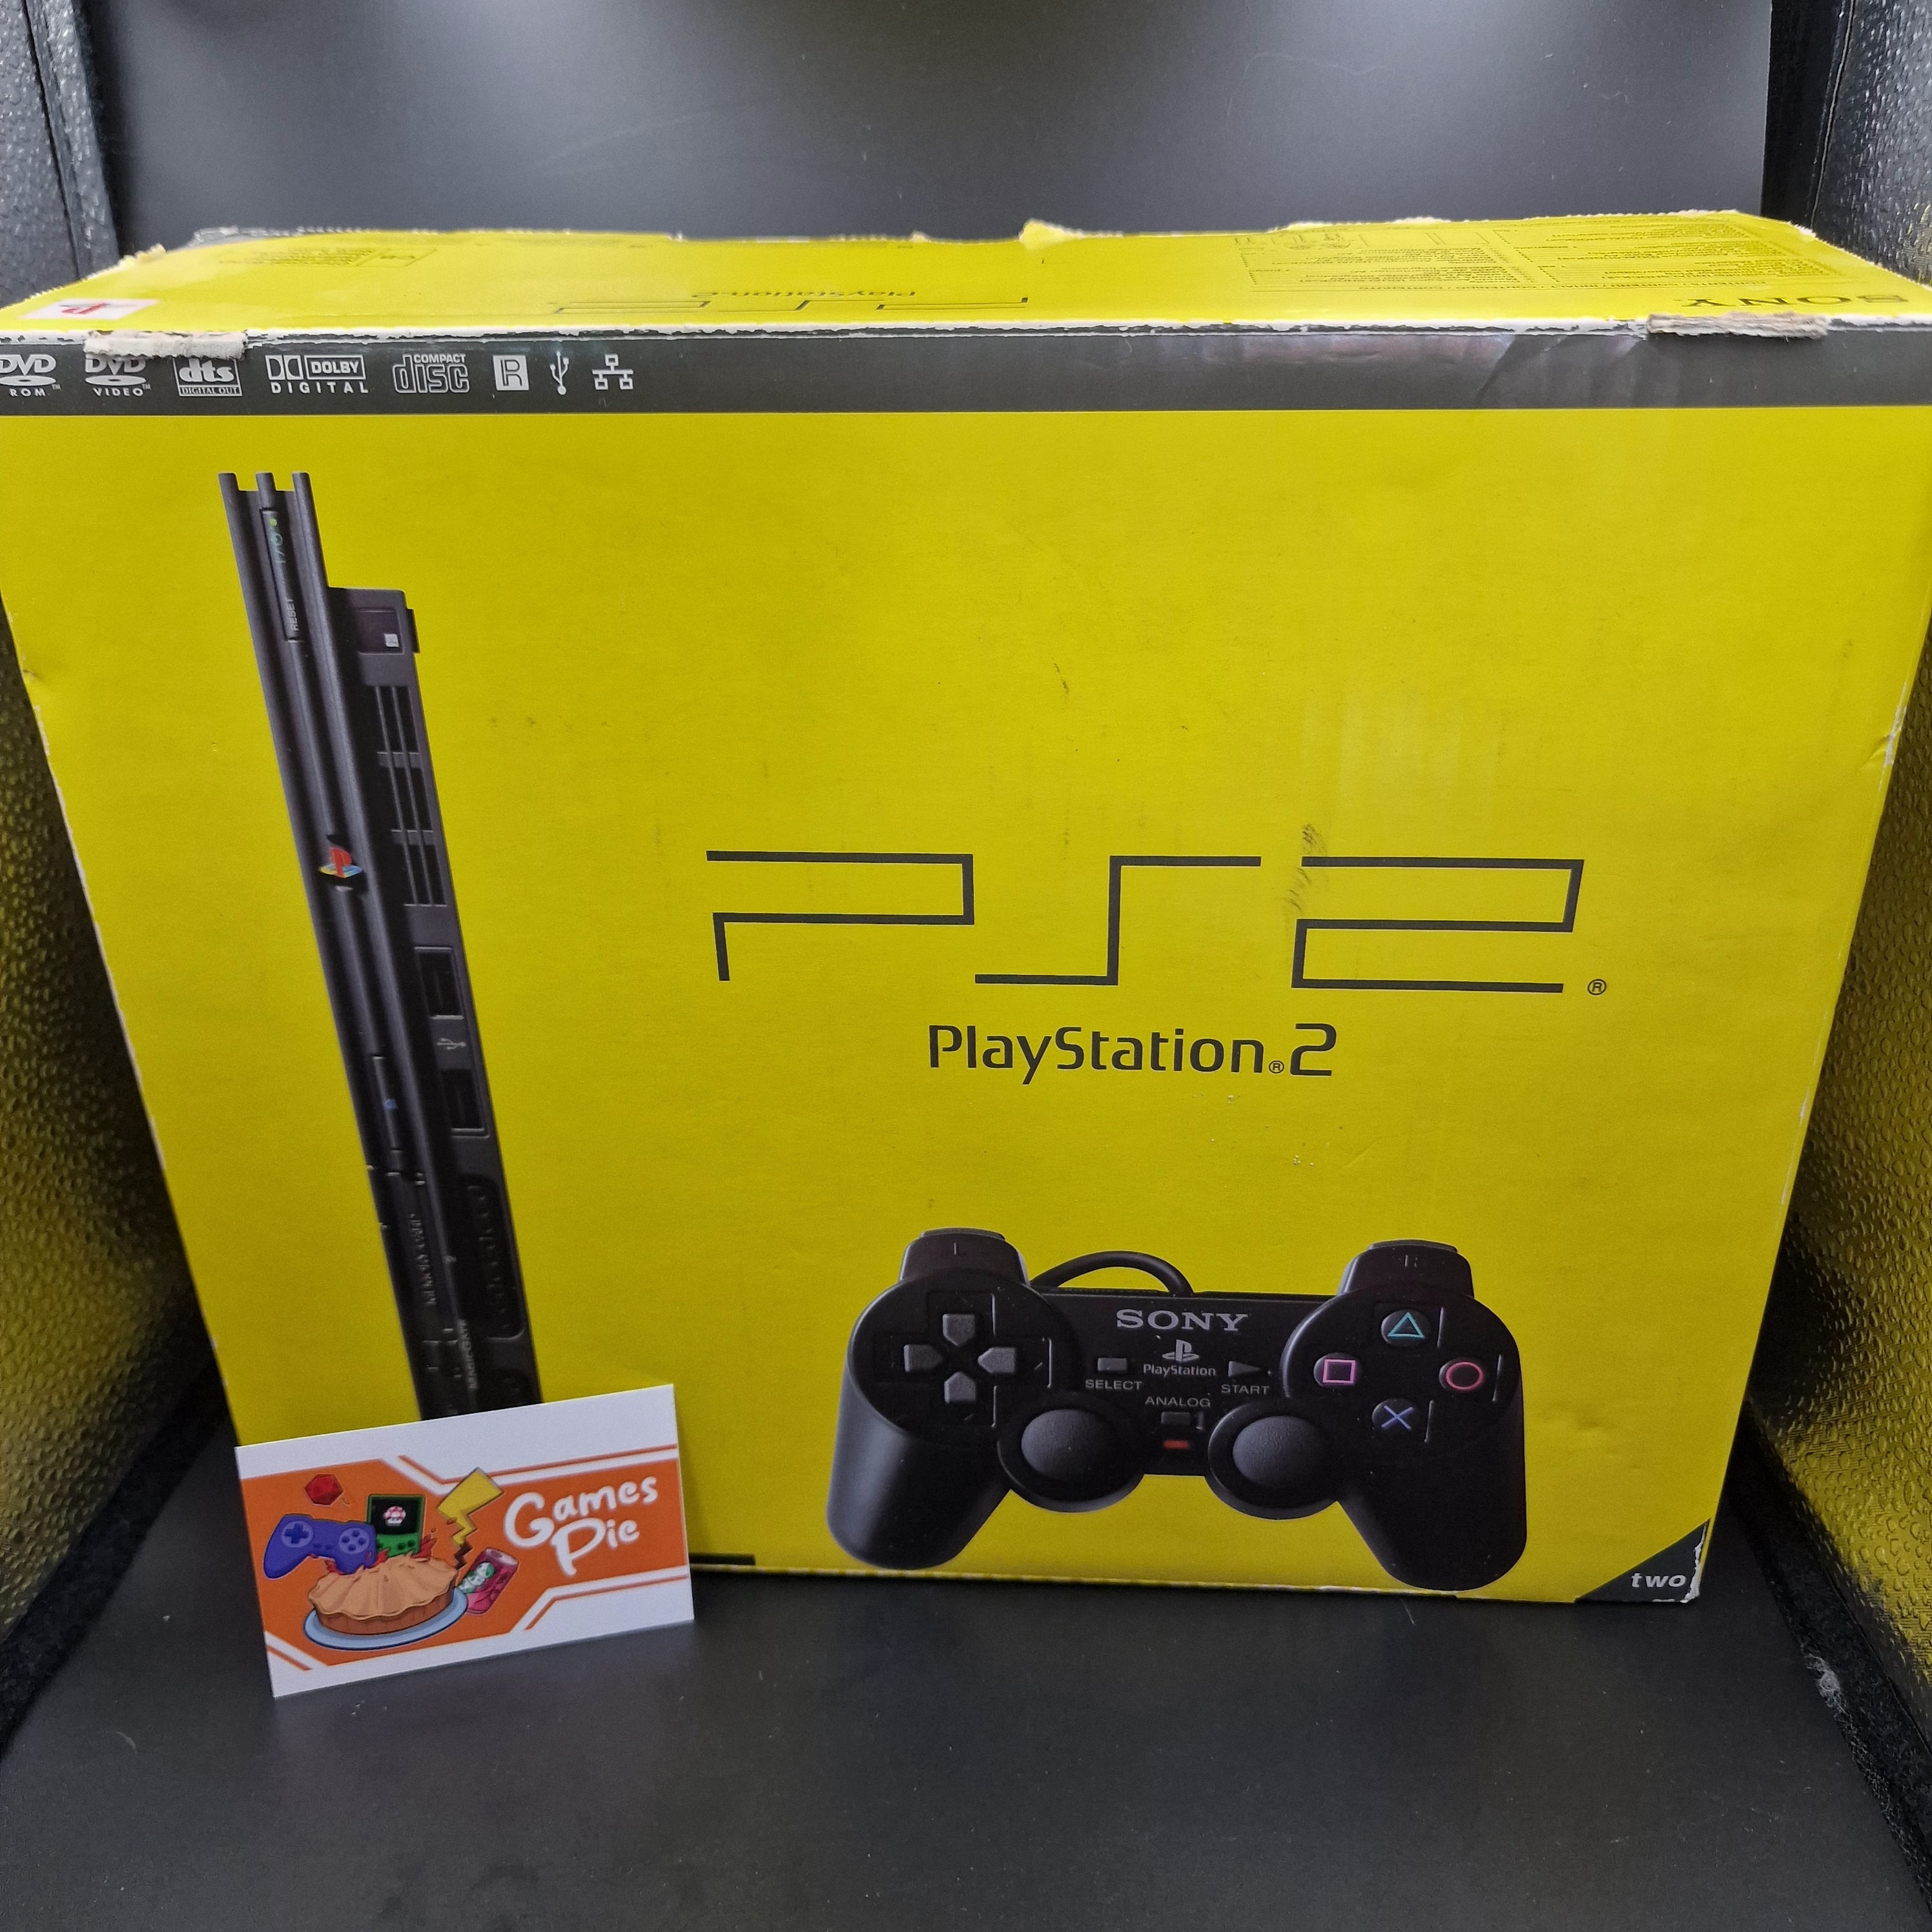 PlayStation 2 Slim PS2 Boxata, Completa, Nera